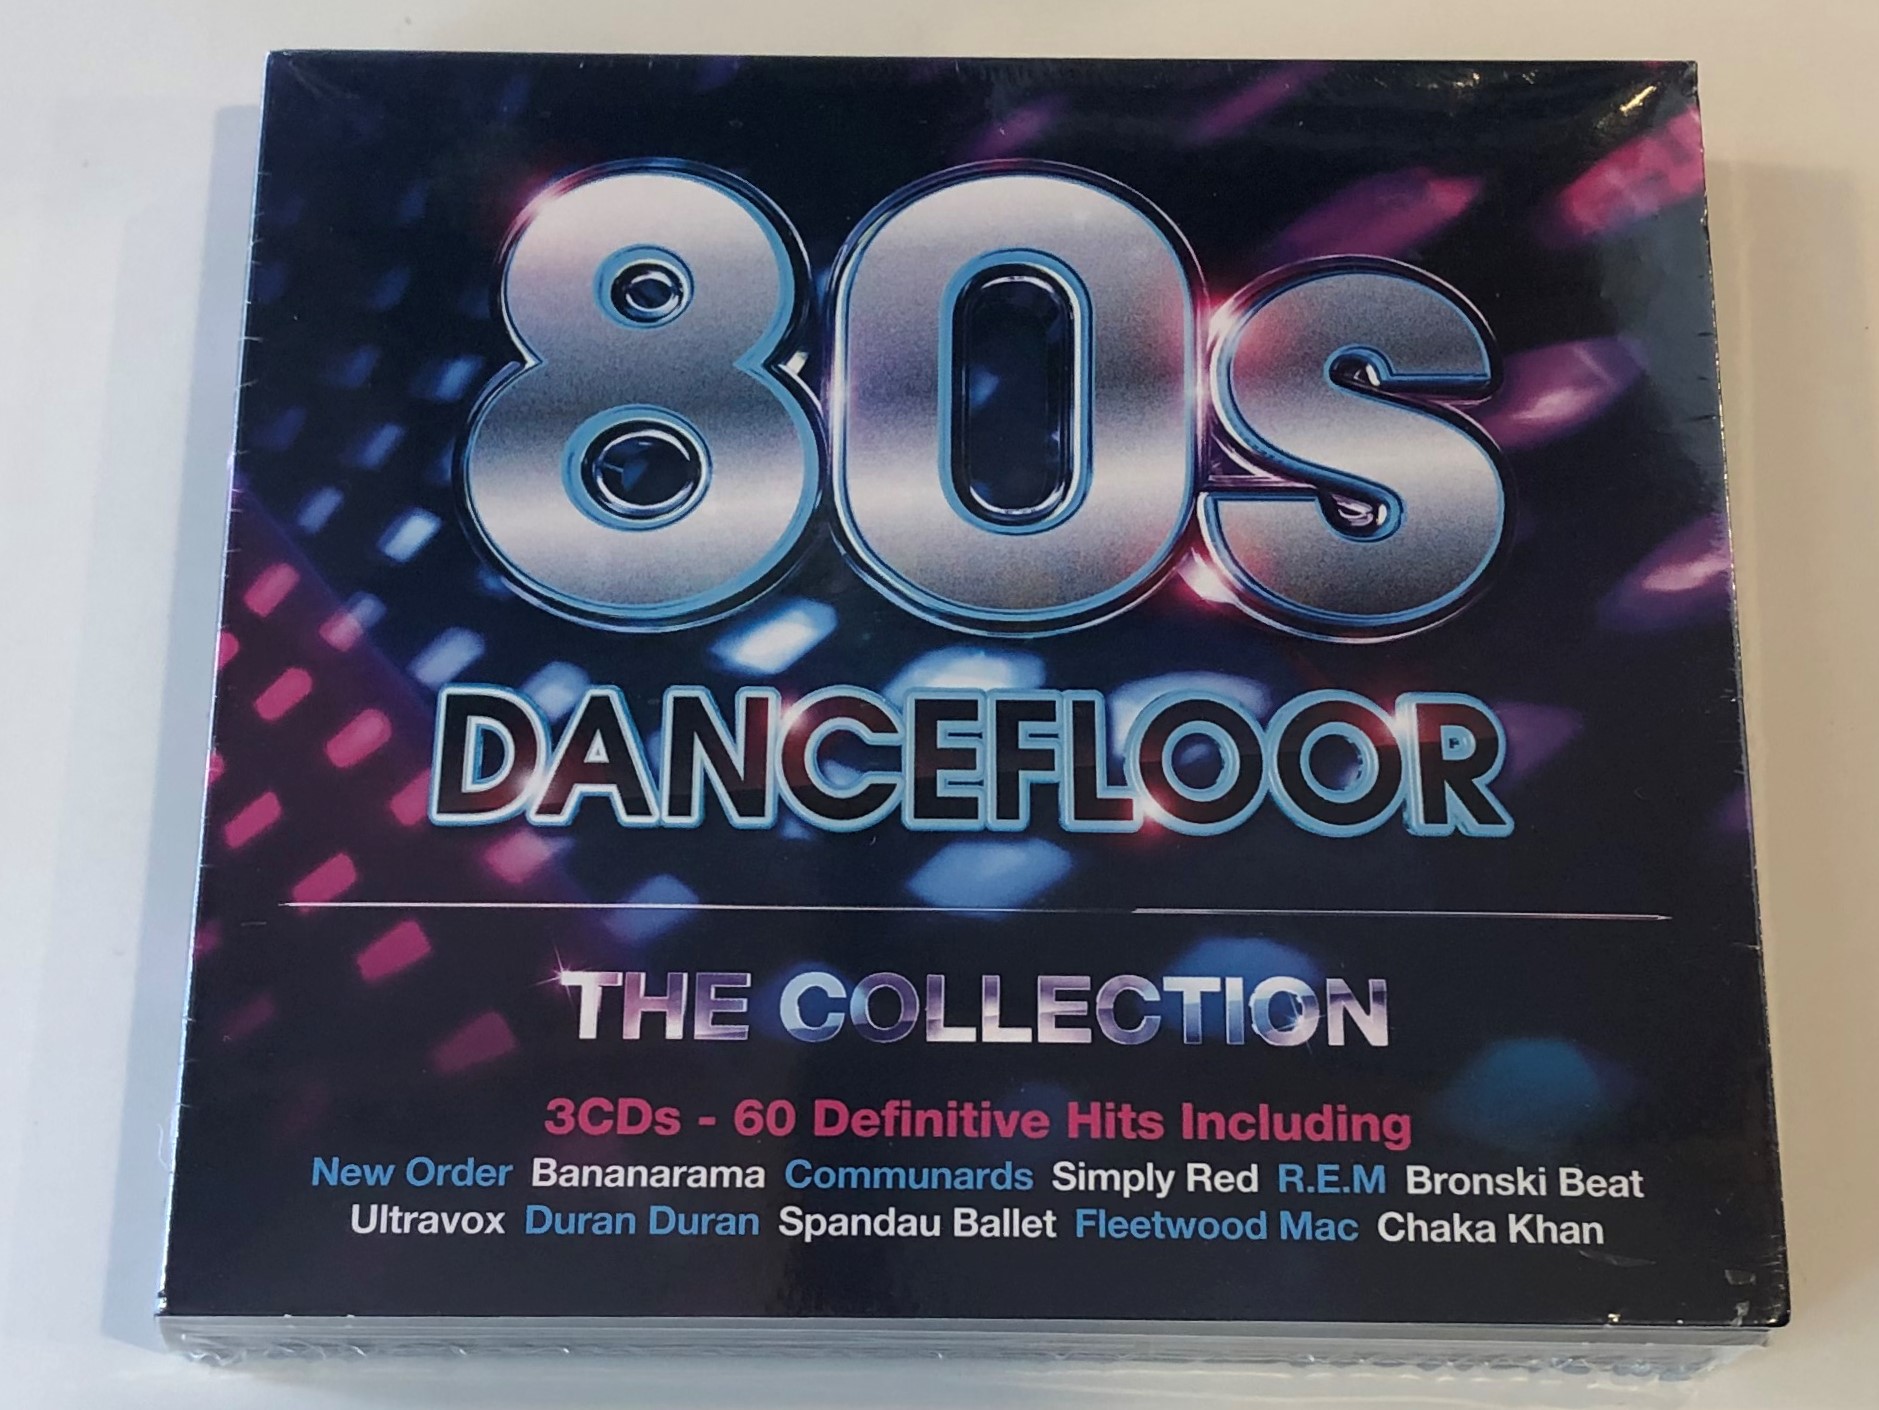 80s-dancefloor-the-collection-3cds-60-definitive-hits-including-new-order-bananarama-communards-simply-red-r.-e.-m.-bronski-beat-ultravox-duran-duran-spandau-ballet-rhino-records-au-1-.jpg